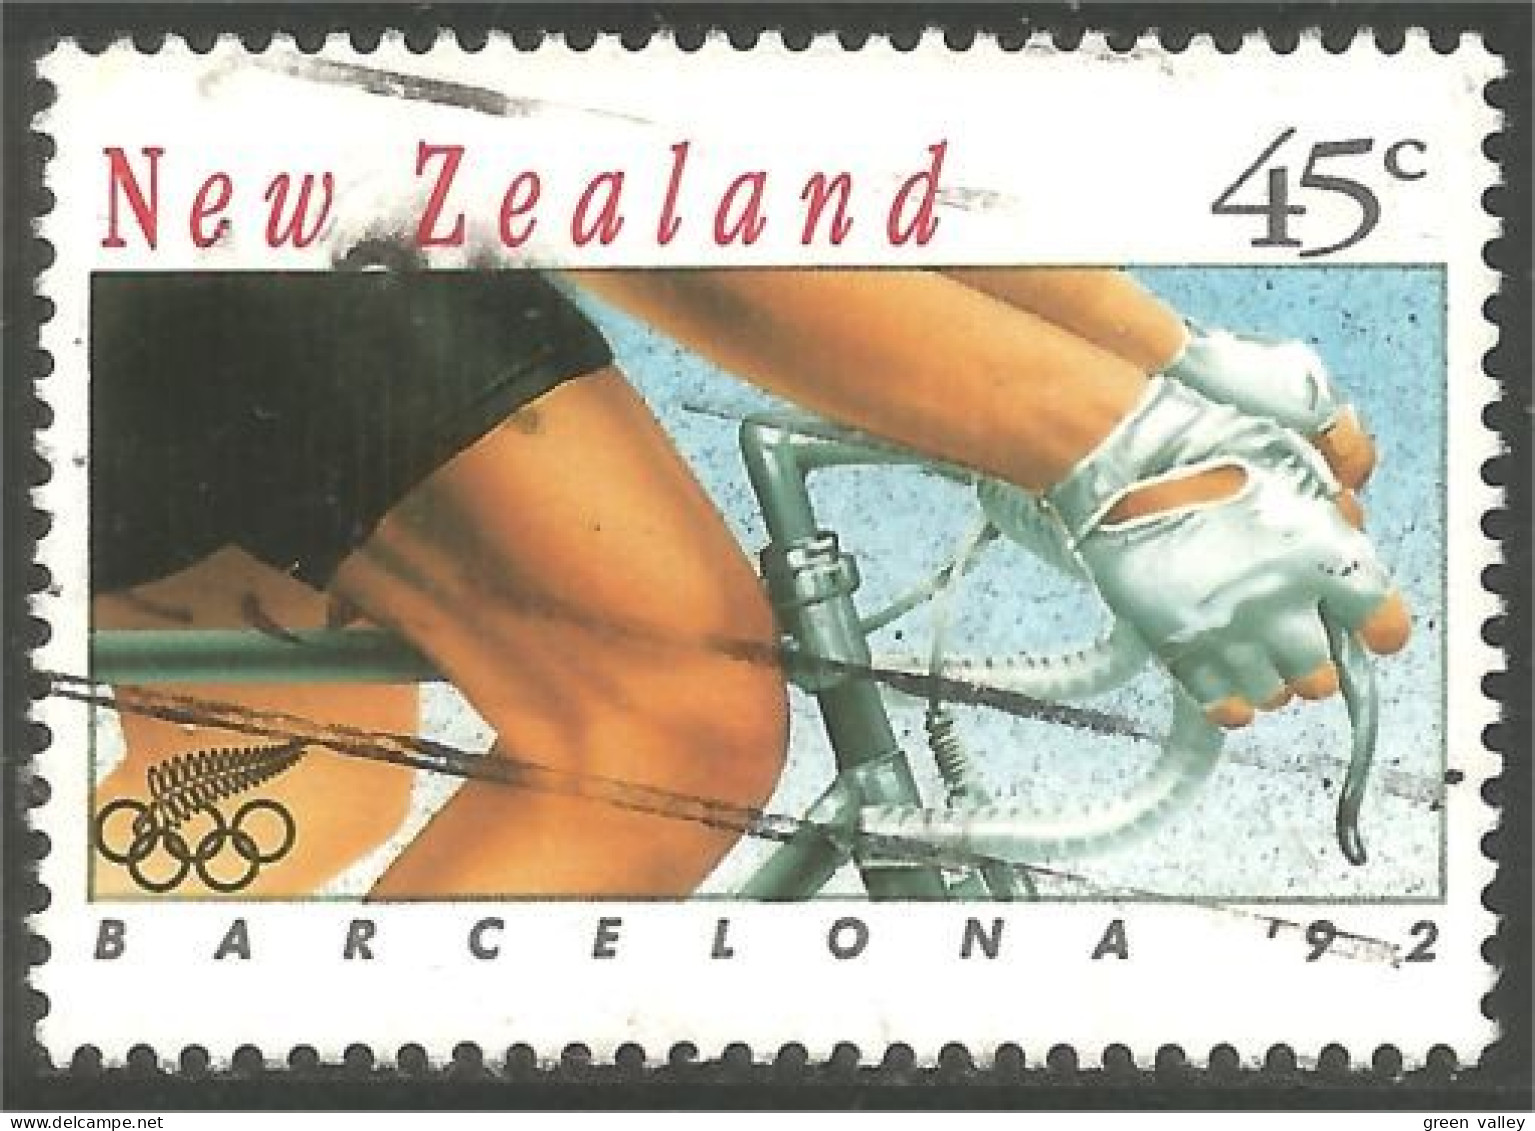 706 New Zealand Olympics Barcelona Cycling Bicycle Race Fahrrad Bicyclette Vélo Cyclisme (NZ-155c) - Cycling